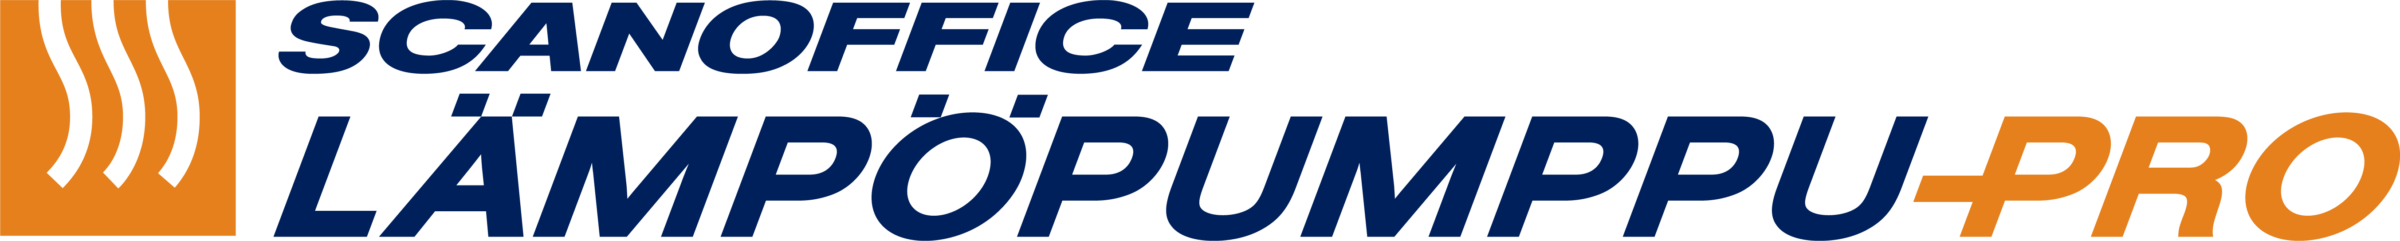 scanoffice logo